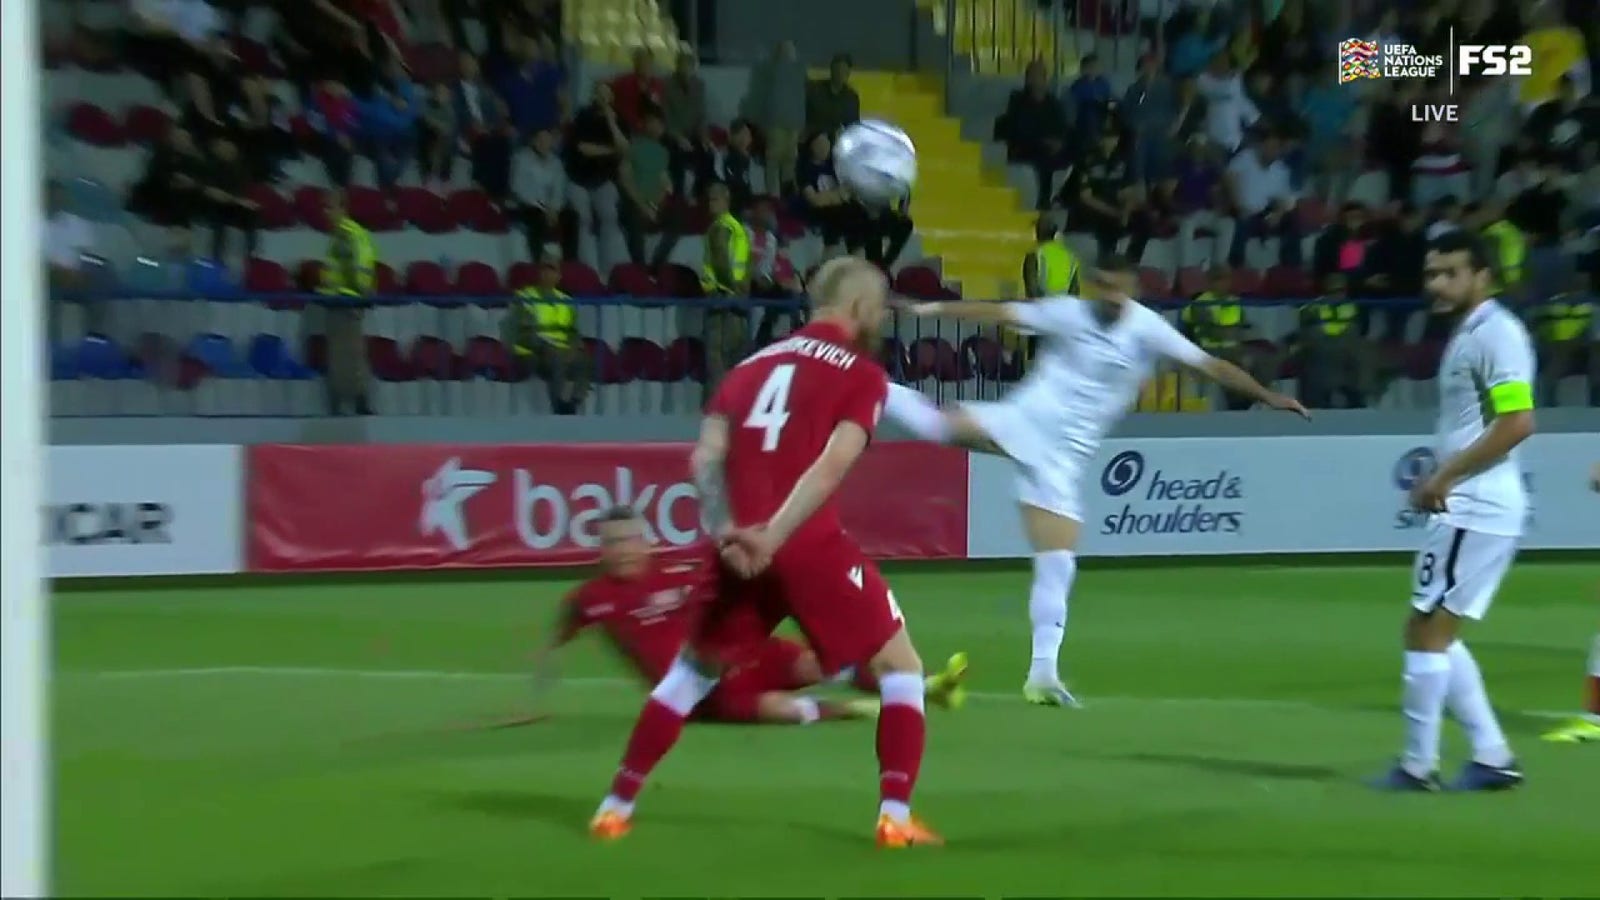 Mahir Emreli nails opposite corner goal for Azerbaijan, 1-0